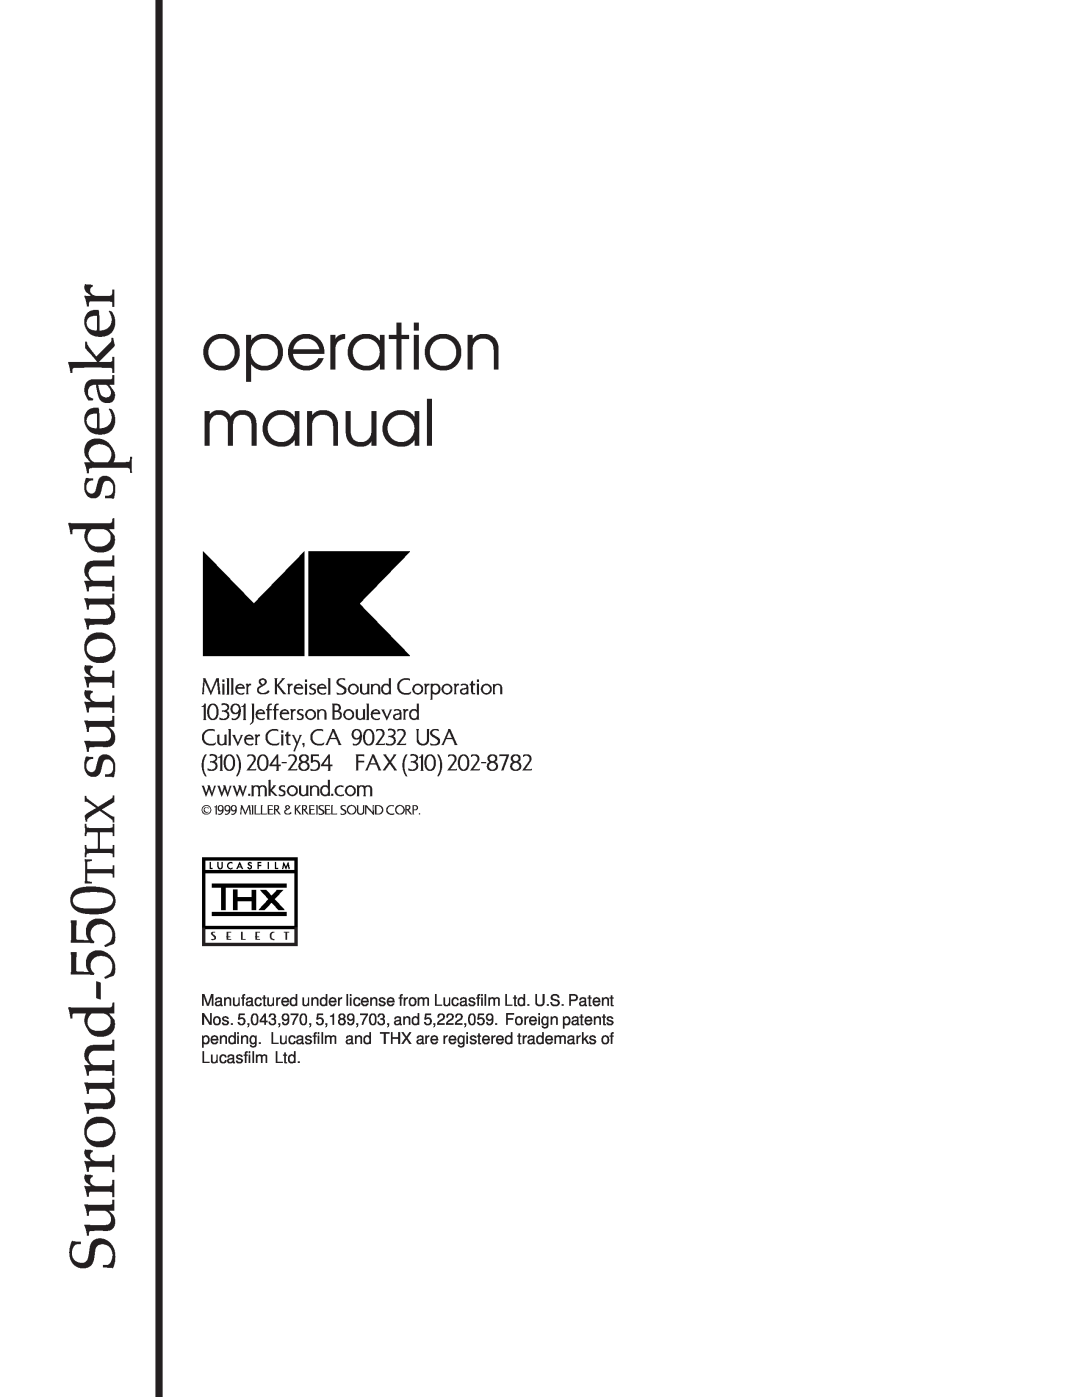 MK Sound SURROUND-550THX operation manual Miller & Kreisel Sound Corporation, Jefferson Boulevard 